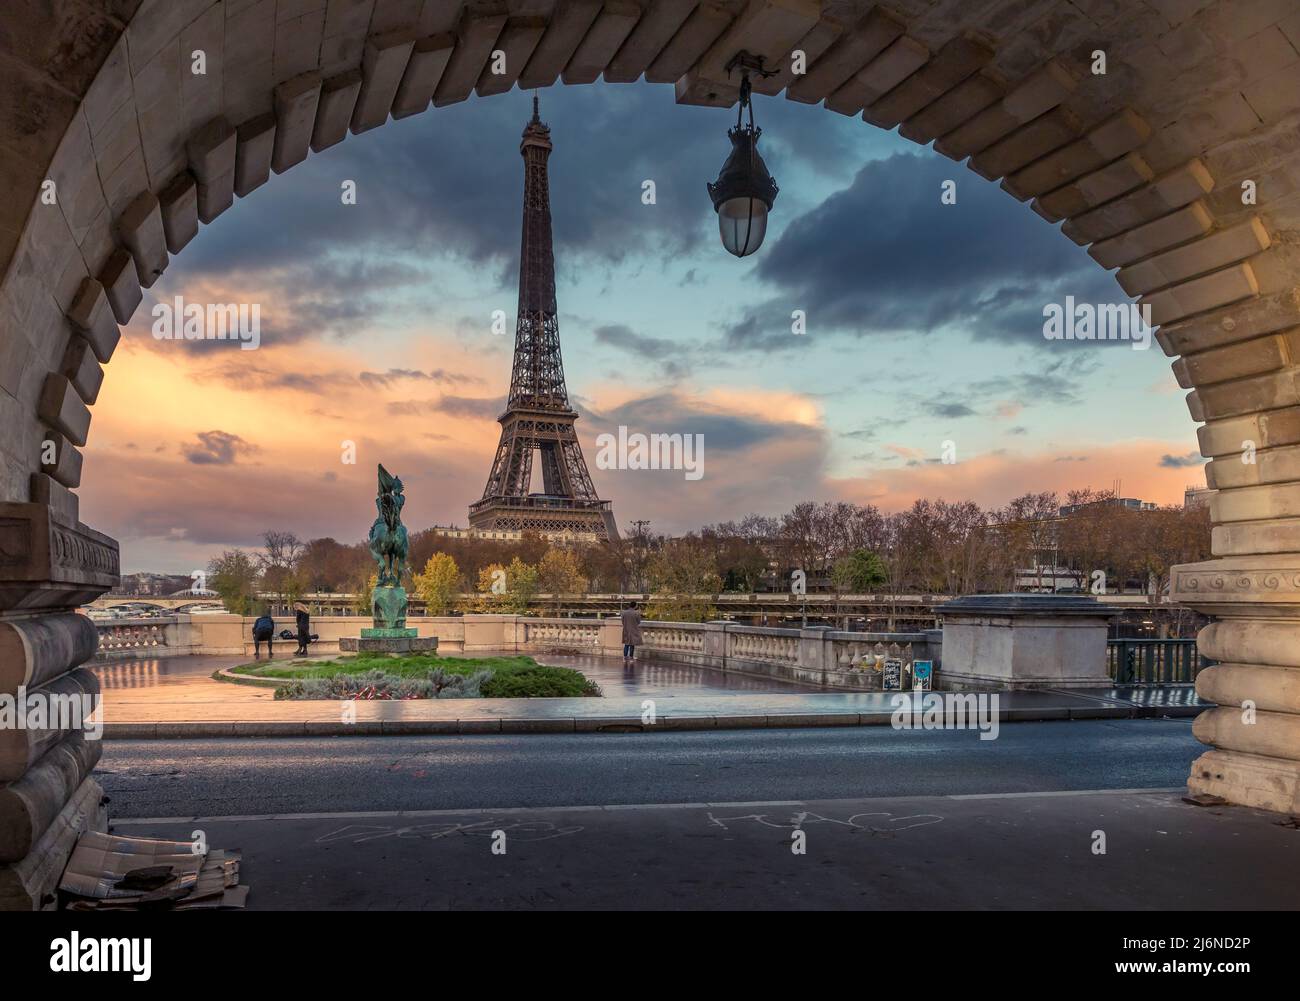 Paris, France - November 19, 2020: Eiffel tower seen from arch of Bir Hakeim bridge in Paris Stock Photo